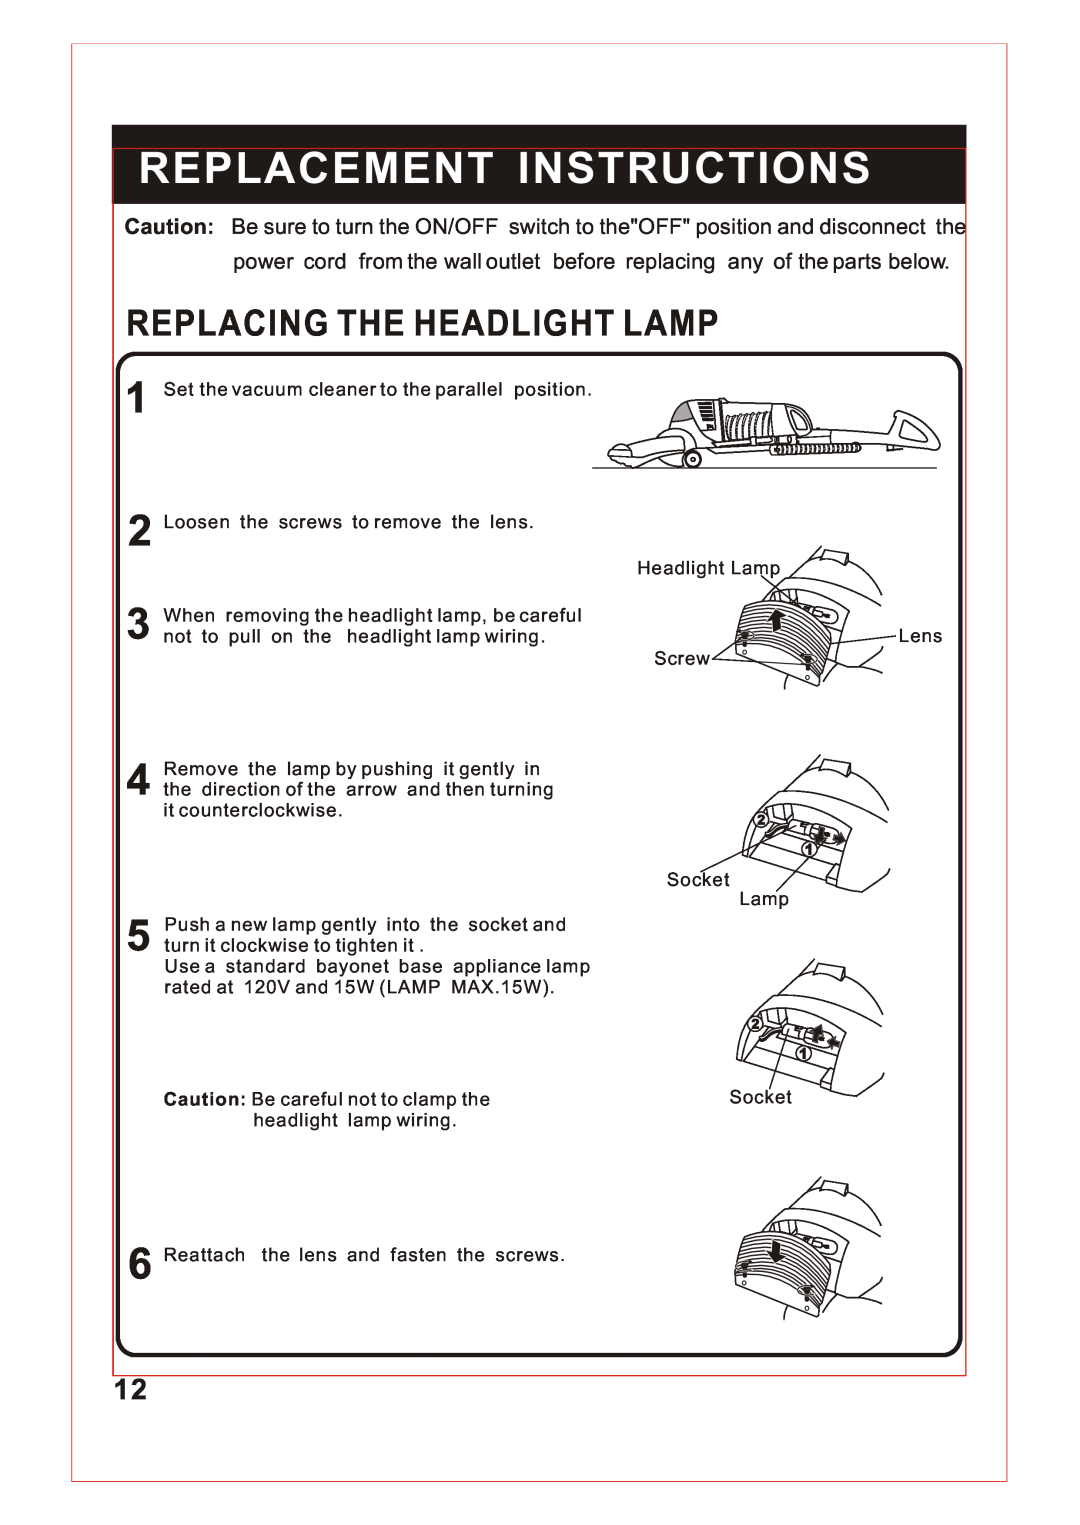 Fantom Vacuum FM740 B instruction manual Replacement Instructions, Replacing The Headlight Lamp 